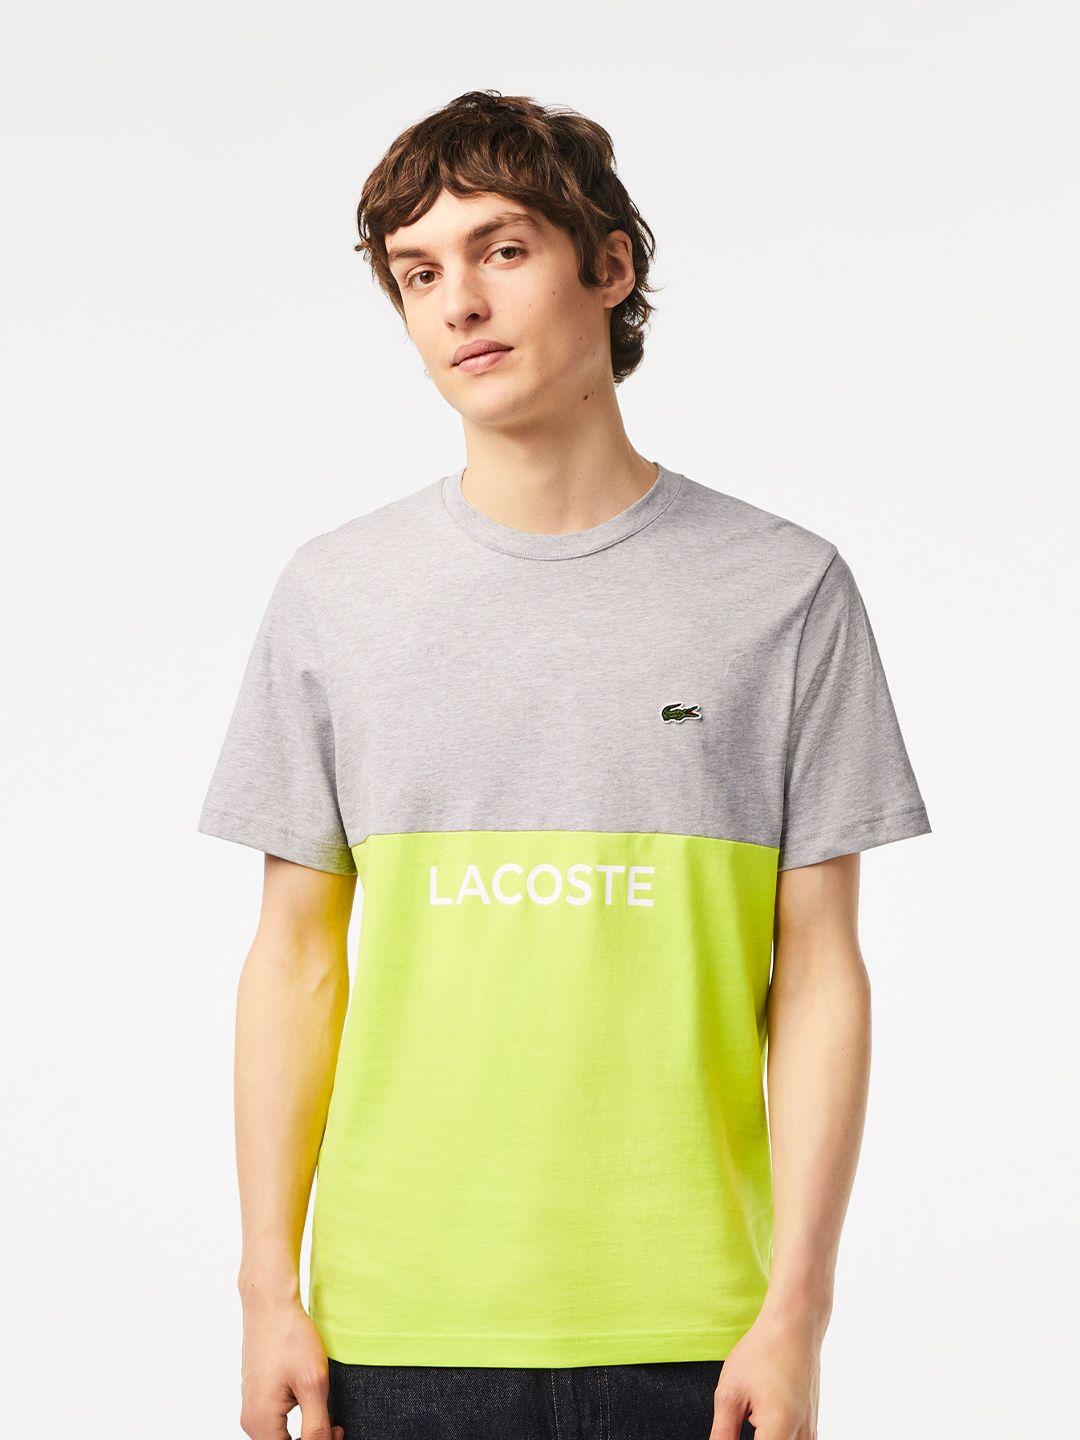 lacoste colourblocked pure cotton jersey t-shirt